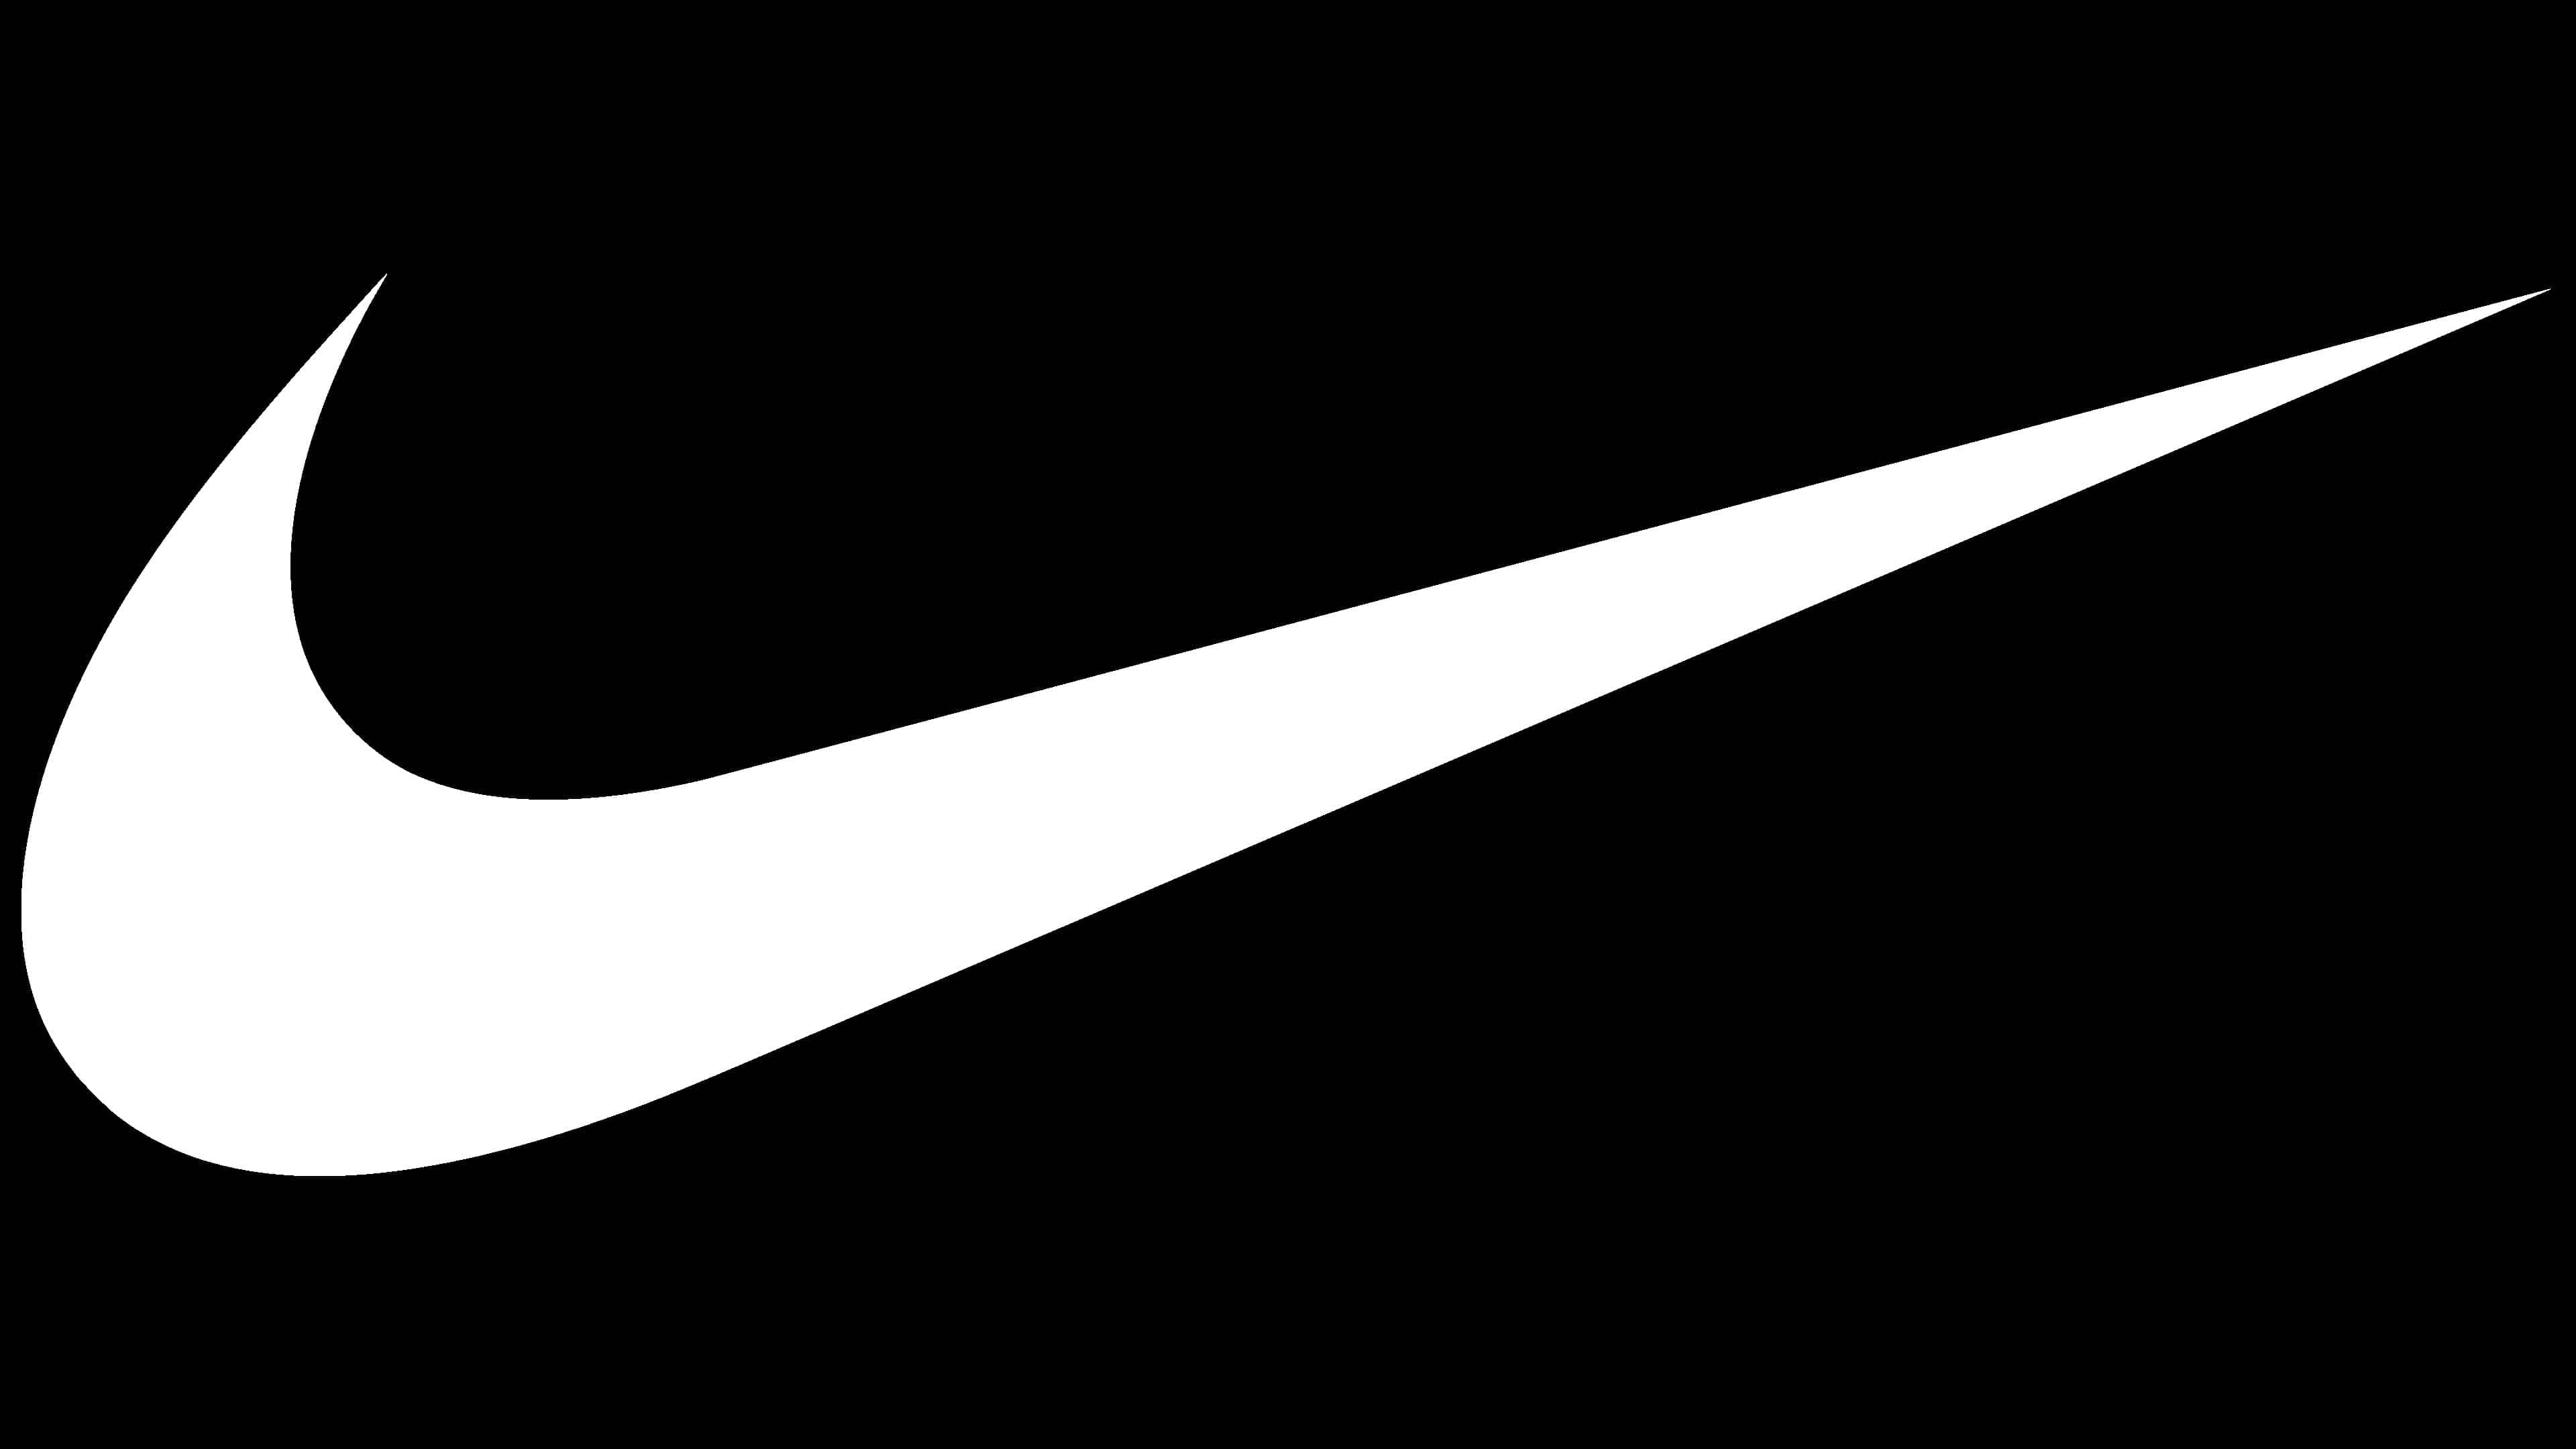 Desaparecido Metáfora Nervio Nike Logo, symbol, meaning, history, PNG, brand